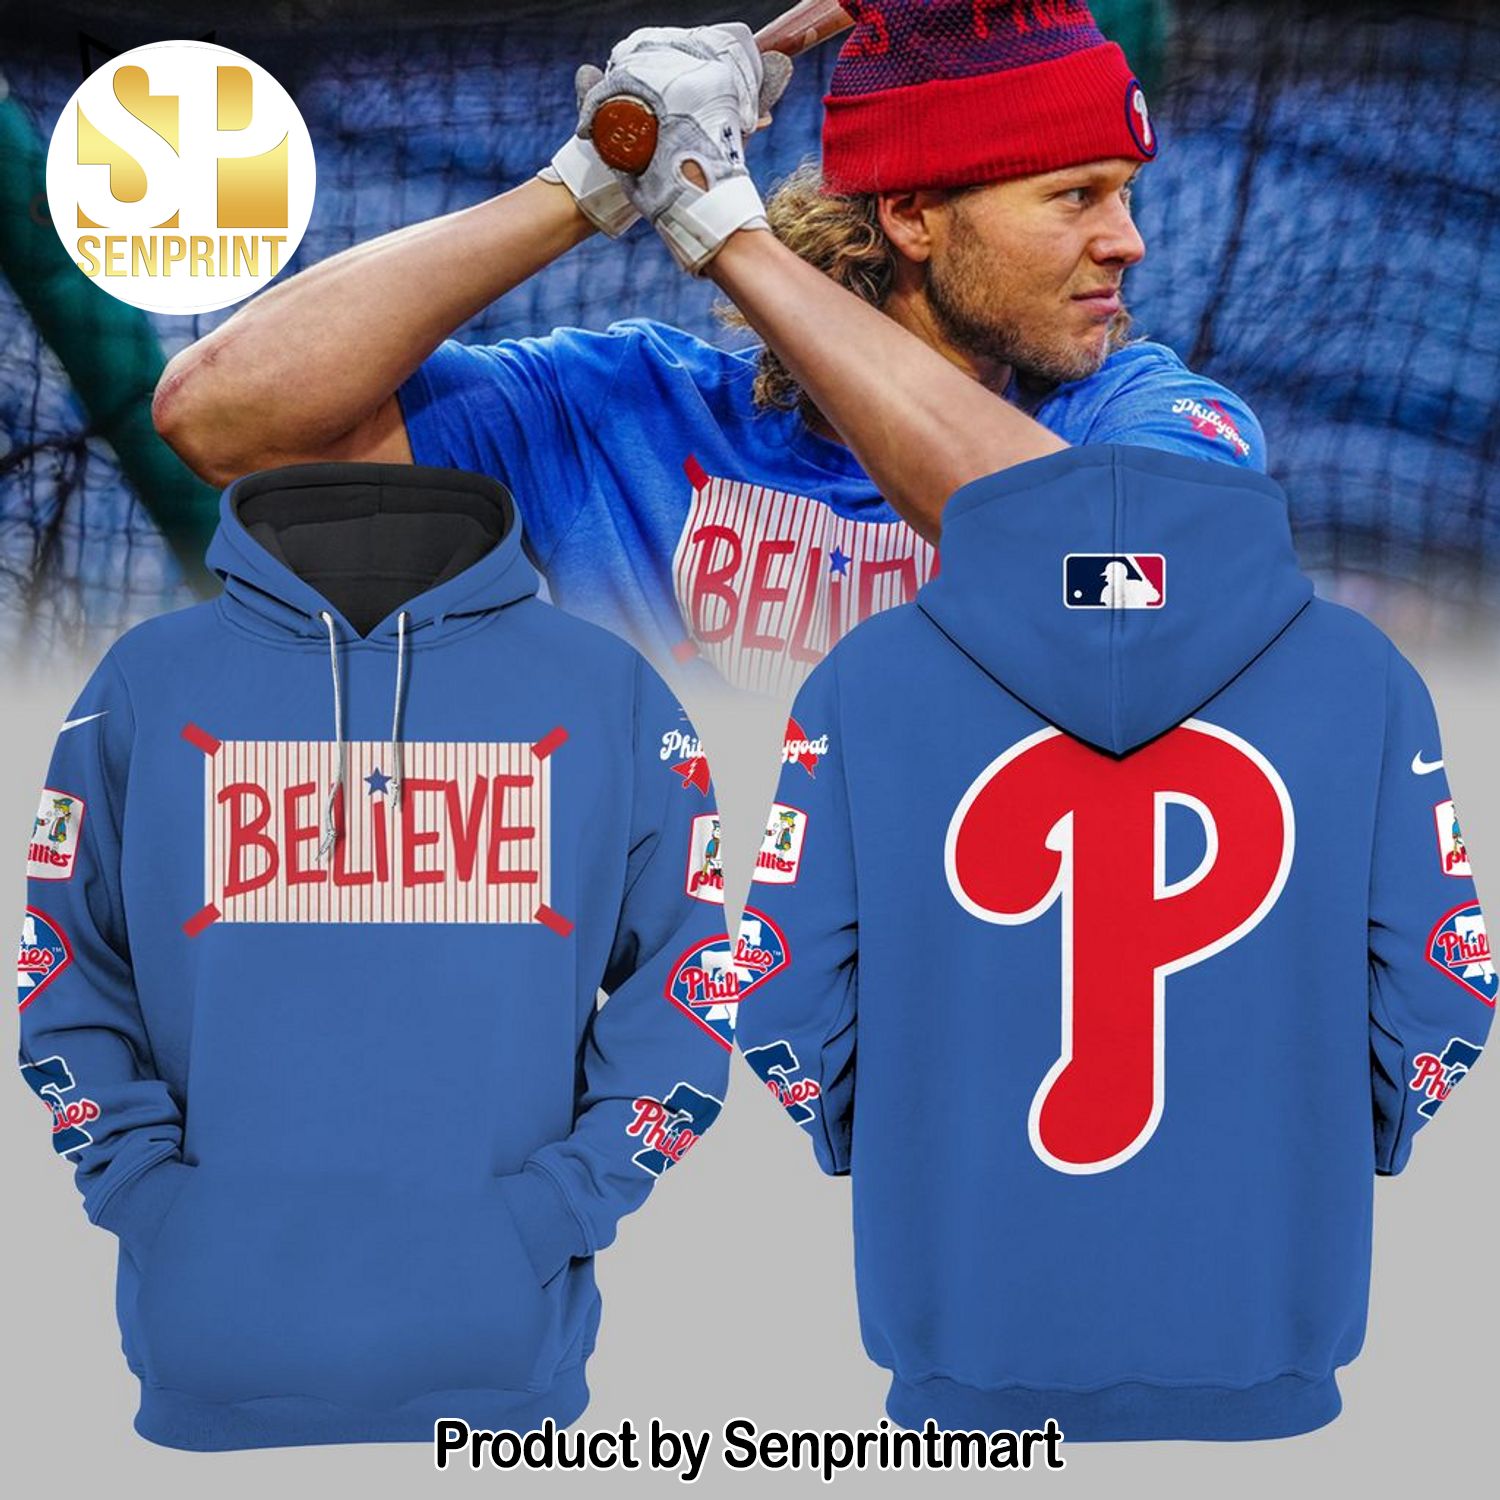 Philadelphia Phillies Believe Logo Design On Sleeve Full Printed Shirt